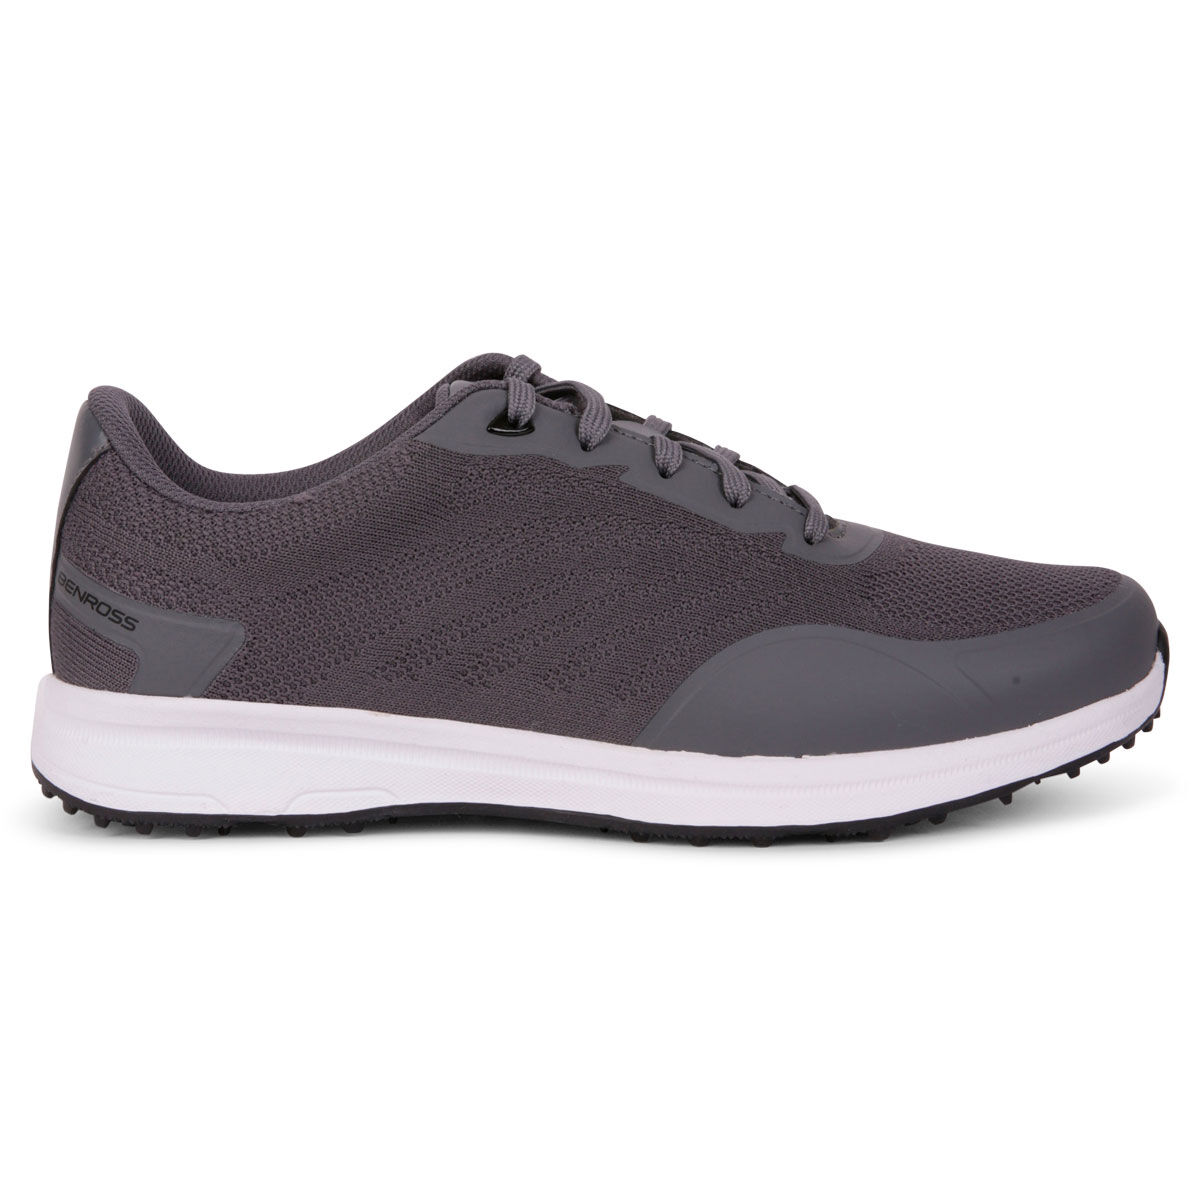 Benross Golf Shoes, Men’s Diablo Waterproof Spikeless, Mens, Dark grey, 7 | American Golf